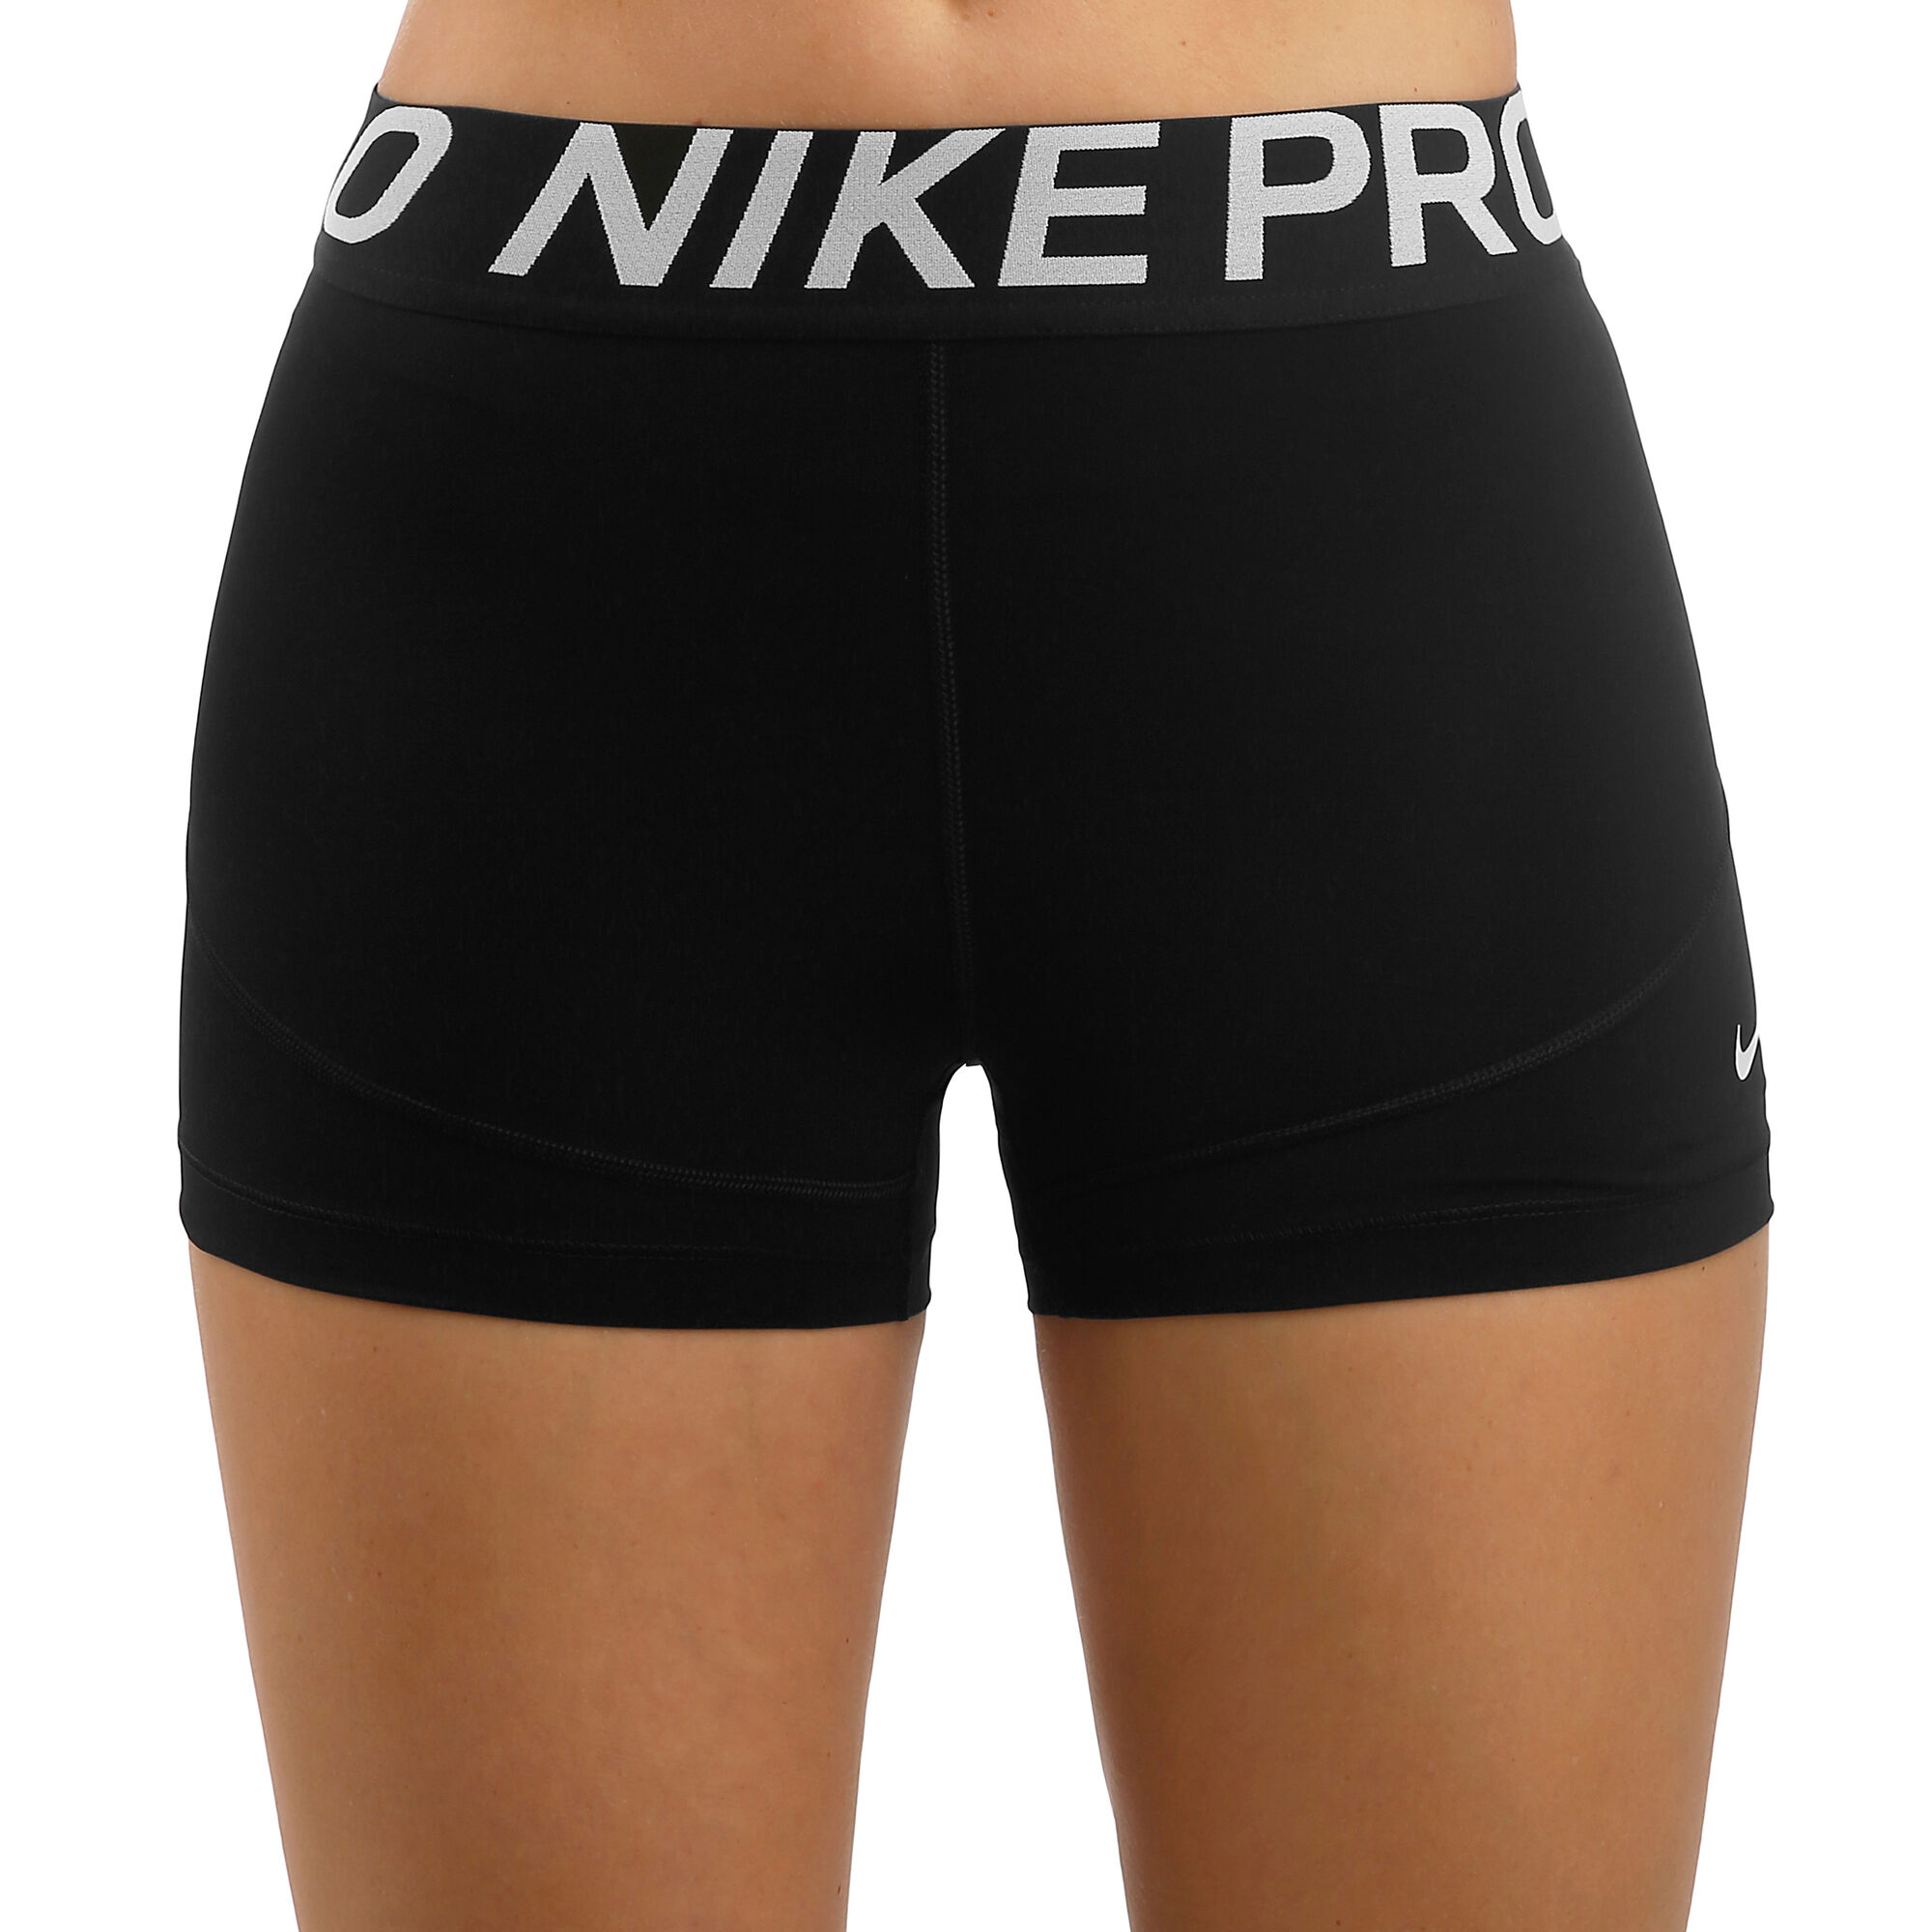 Pro Ball Shorts Girls Black, White, 57% OFF